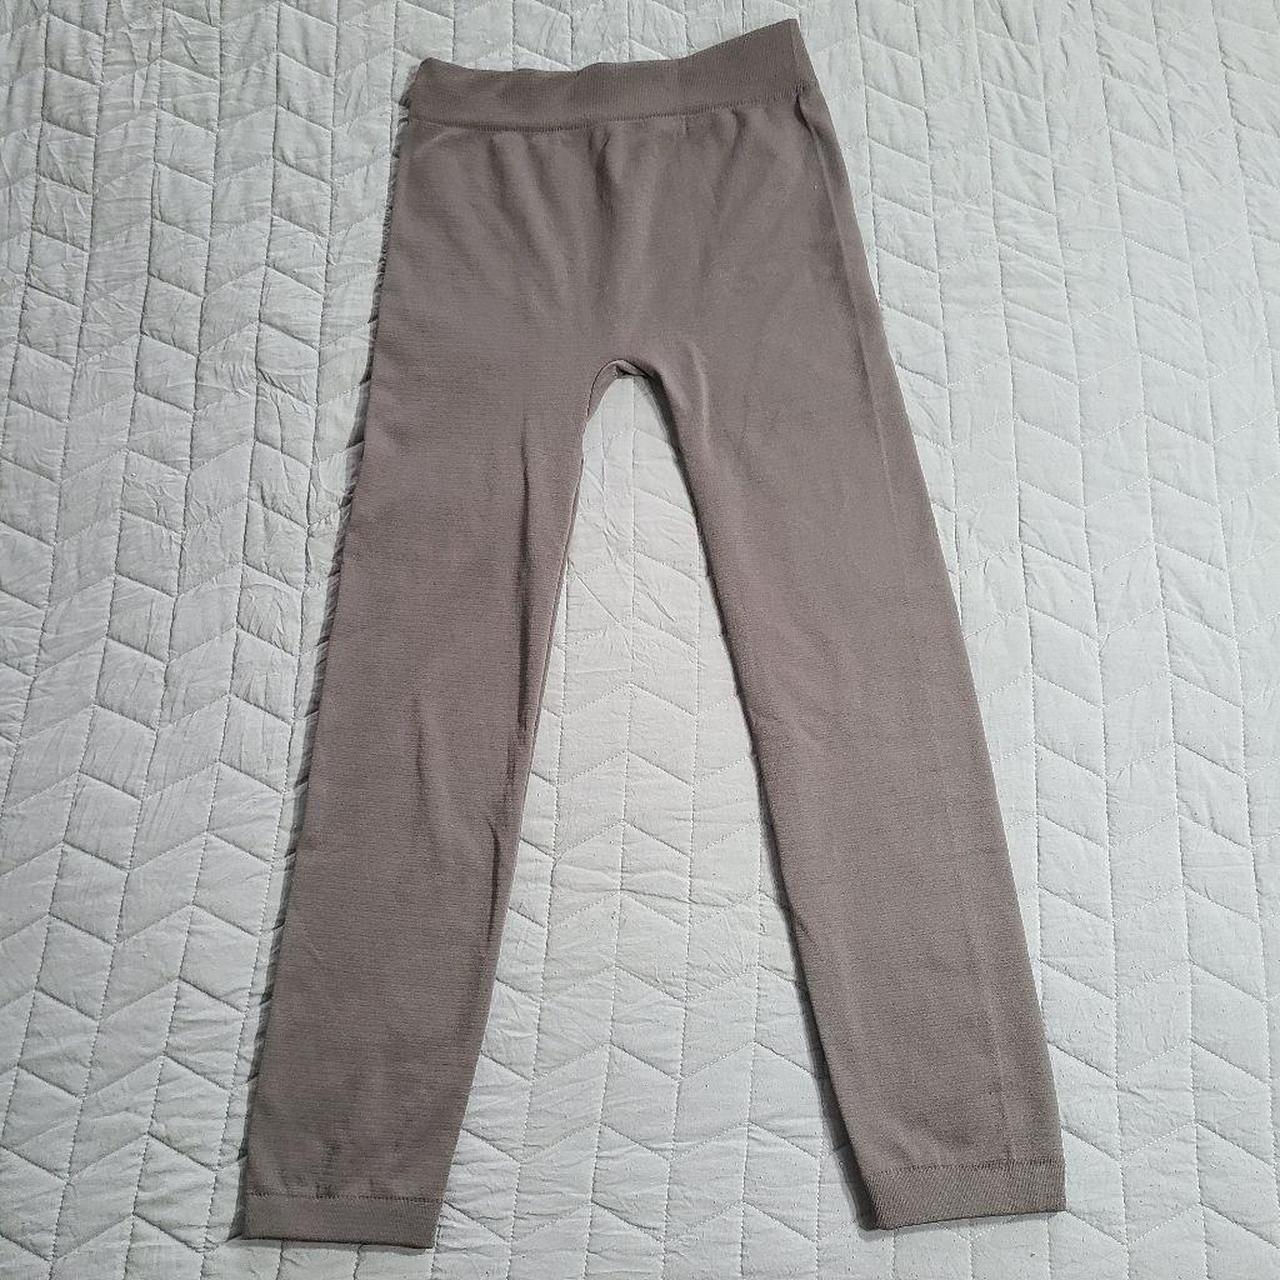 Product Image 3 - F&F charcoal gray leggings (worn